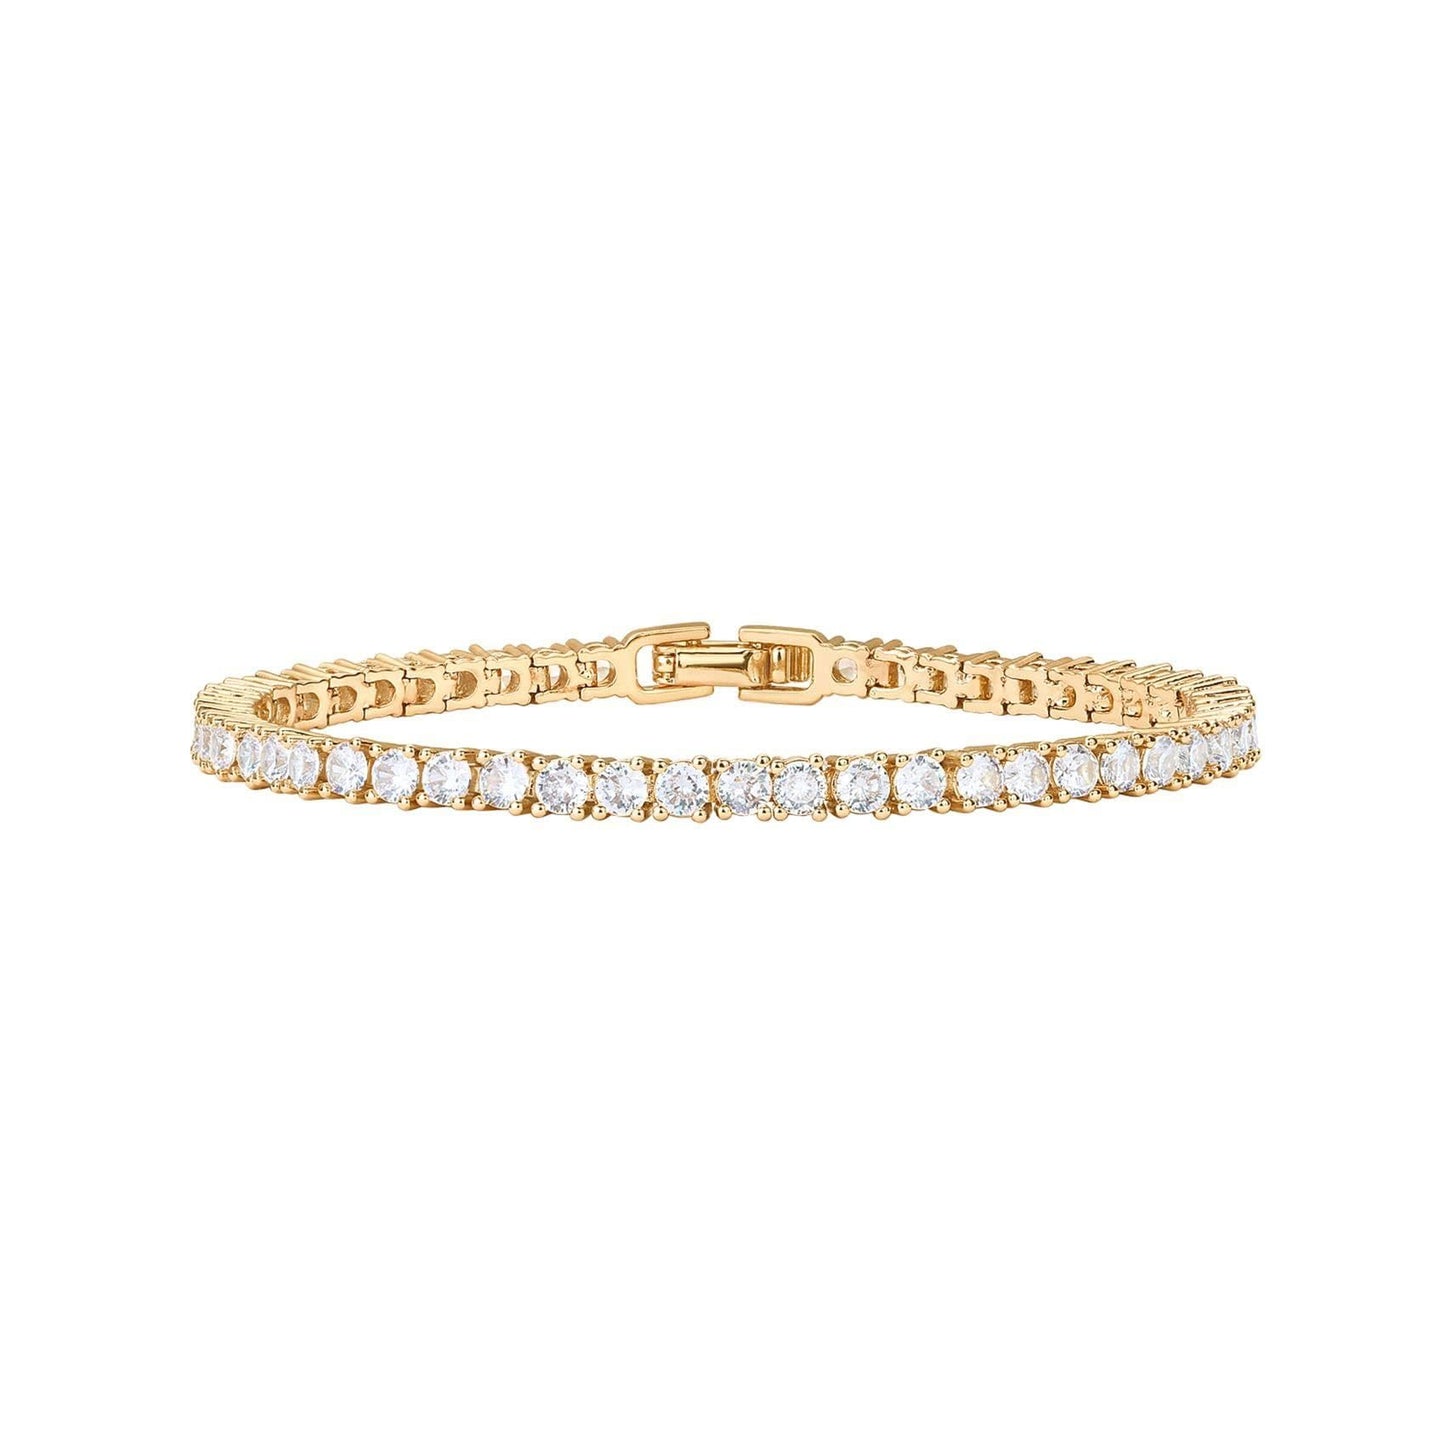 14K Gold Plated 3mm Cubic Zirconia Classic Tennis Bracelet | Gold Bracelets for Women | Size 6.5-7.5 Inch